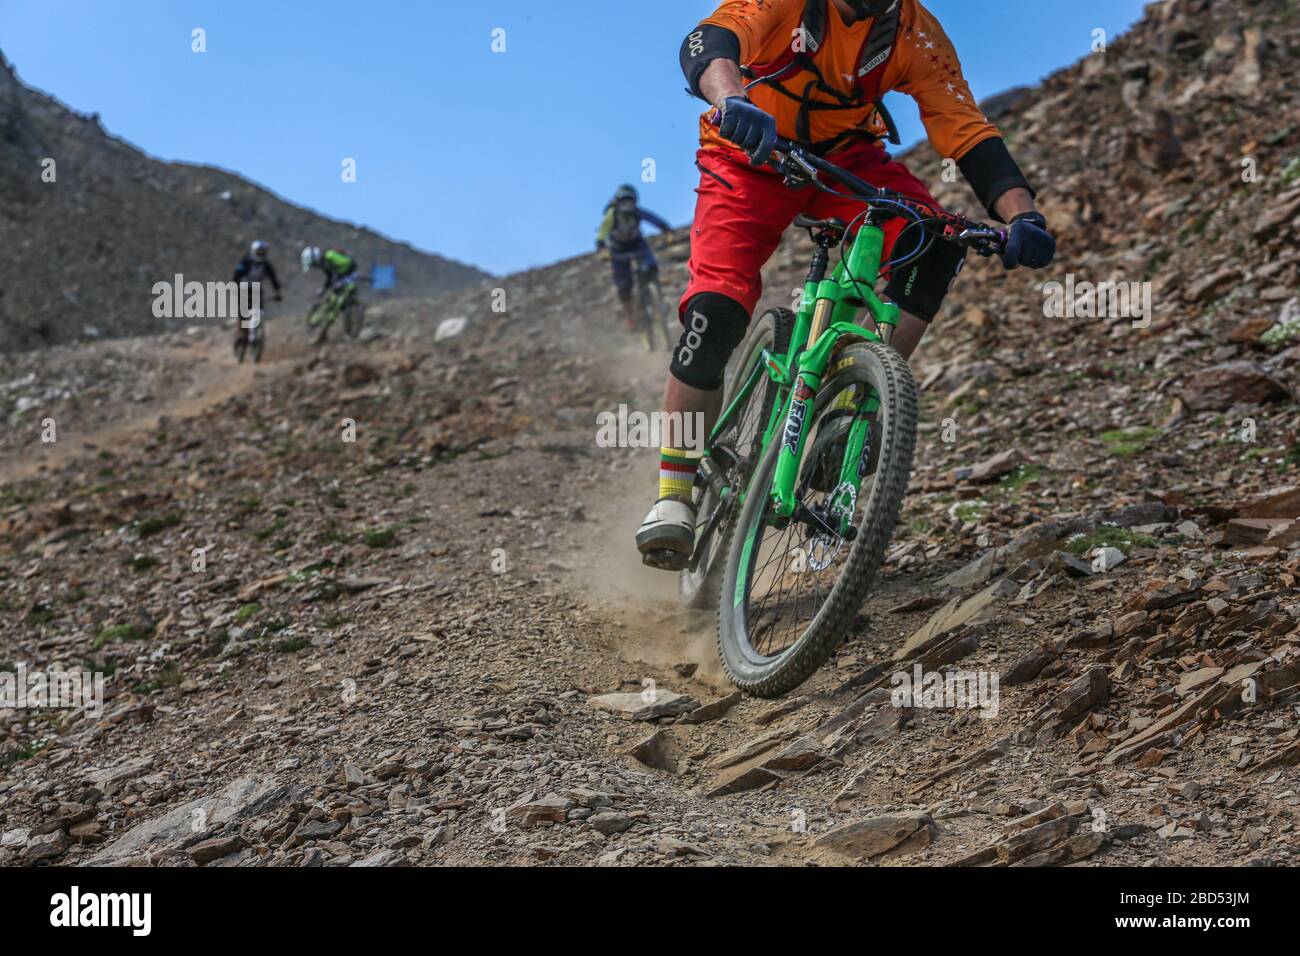 mountain biker in a downhill race Stock Photo